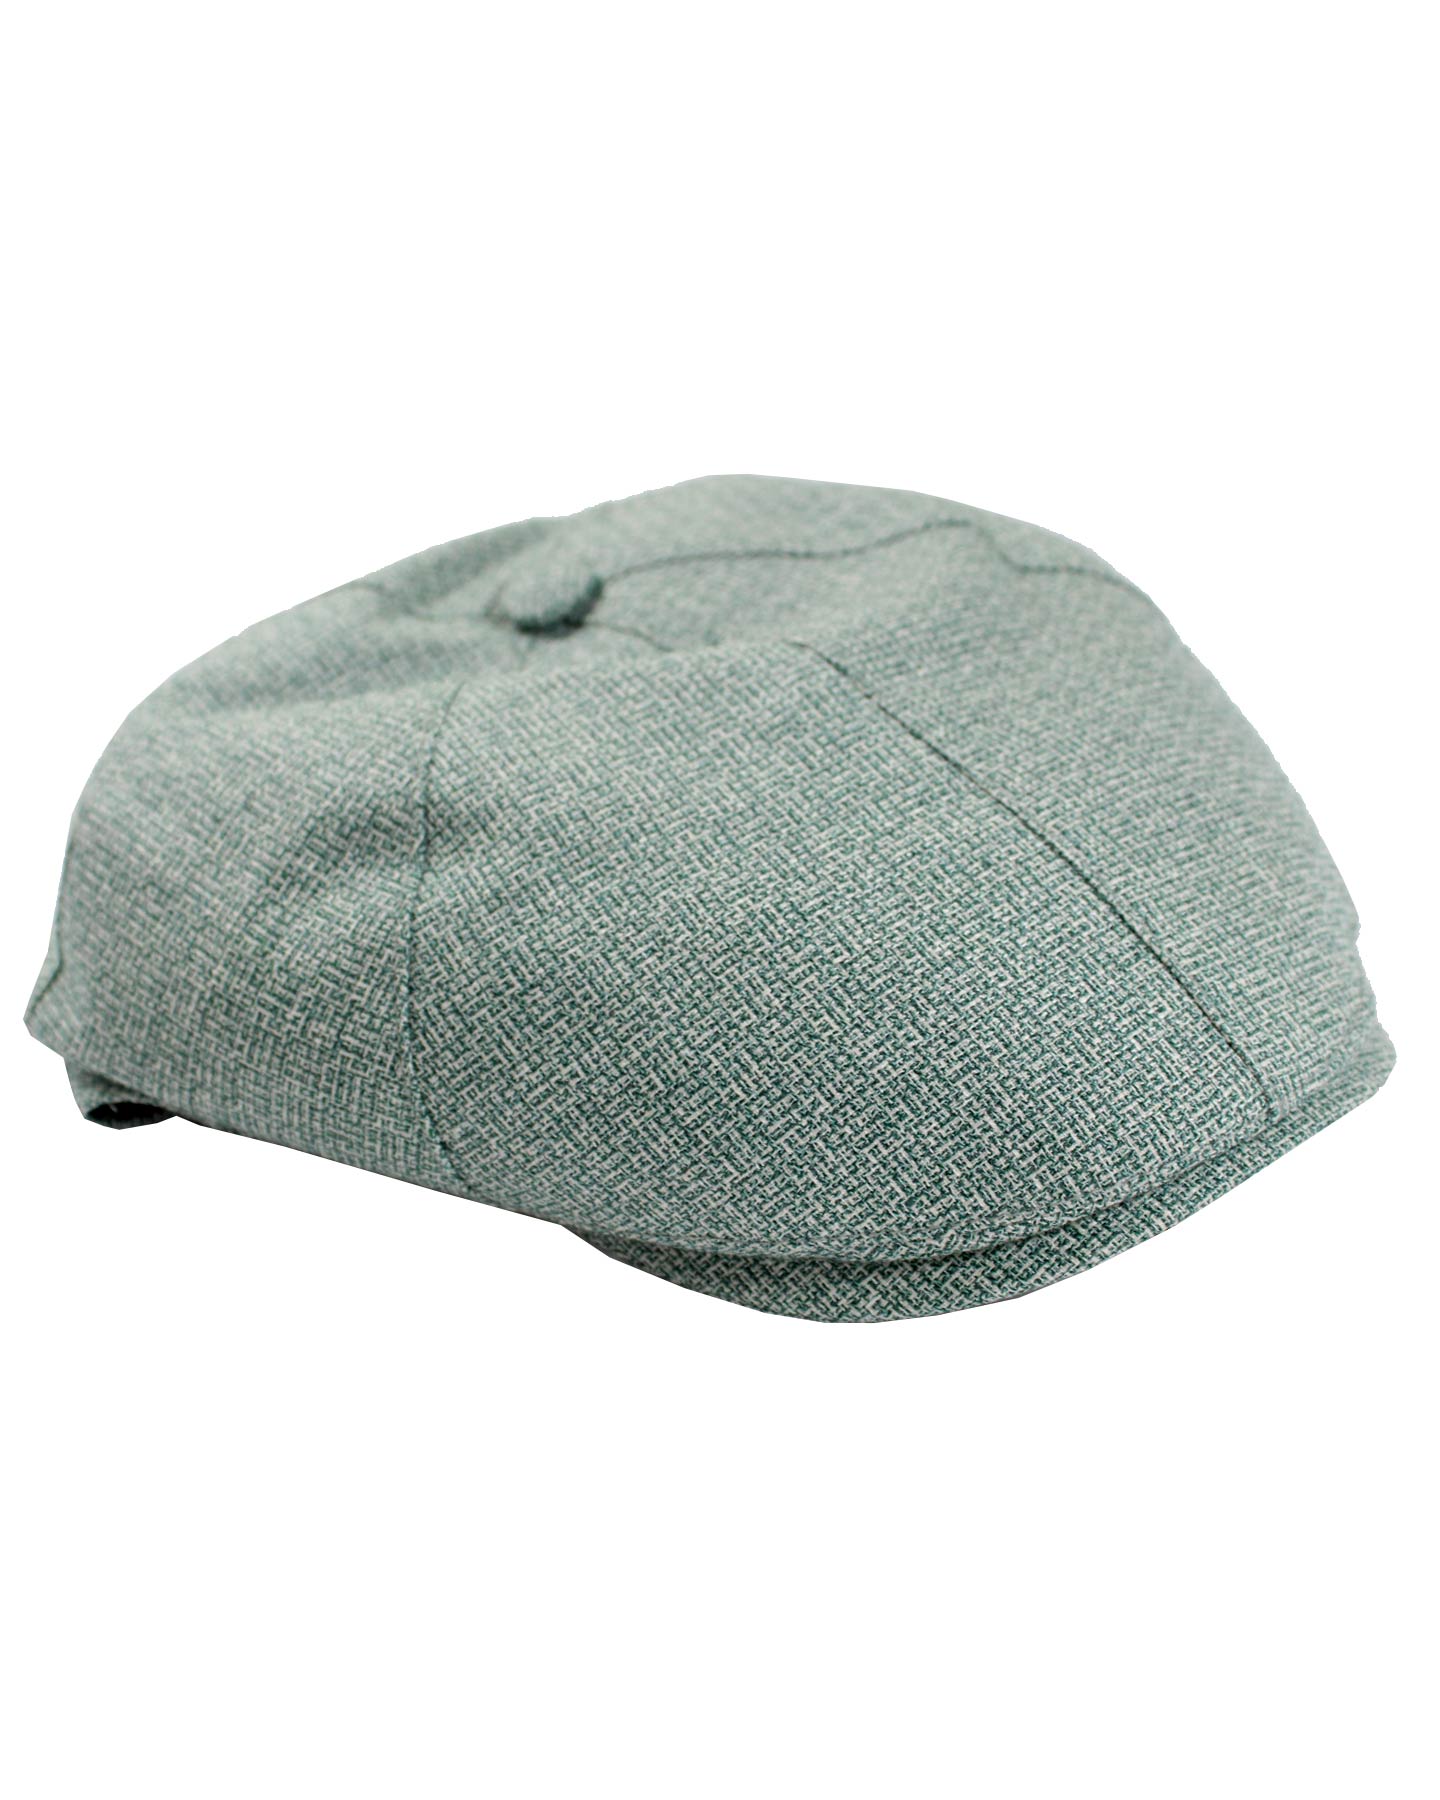 Kiton Soft Cap Green Gray Ivy Cap